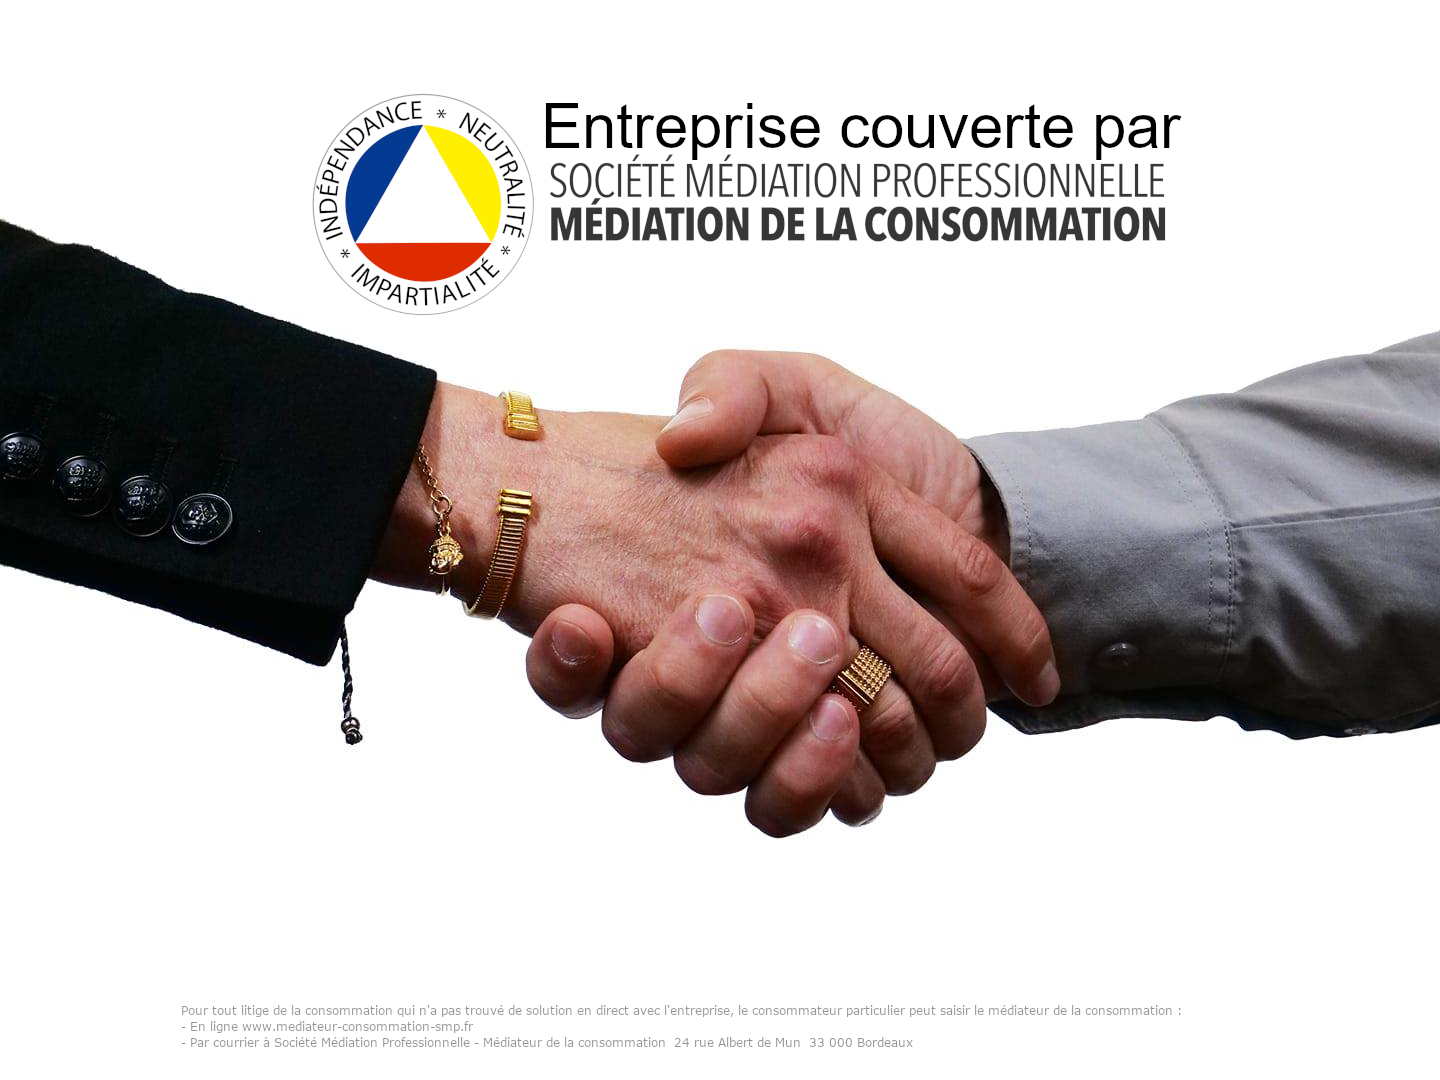 Societe mediation professionnelle logo